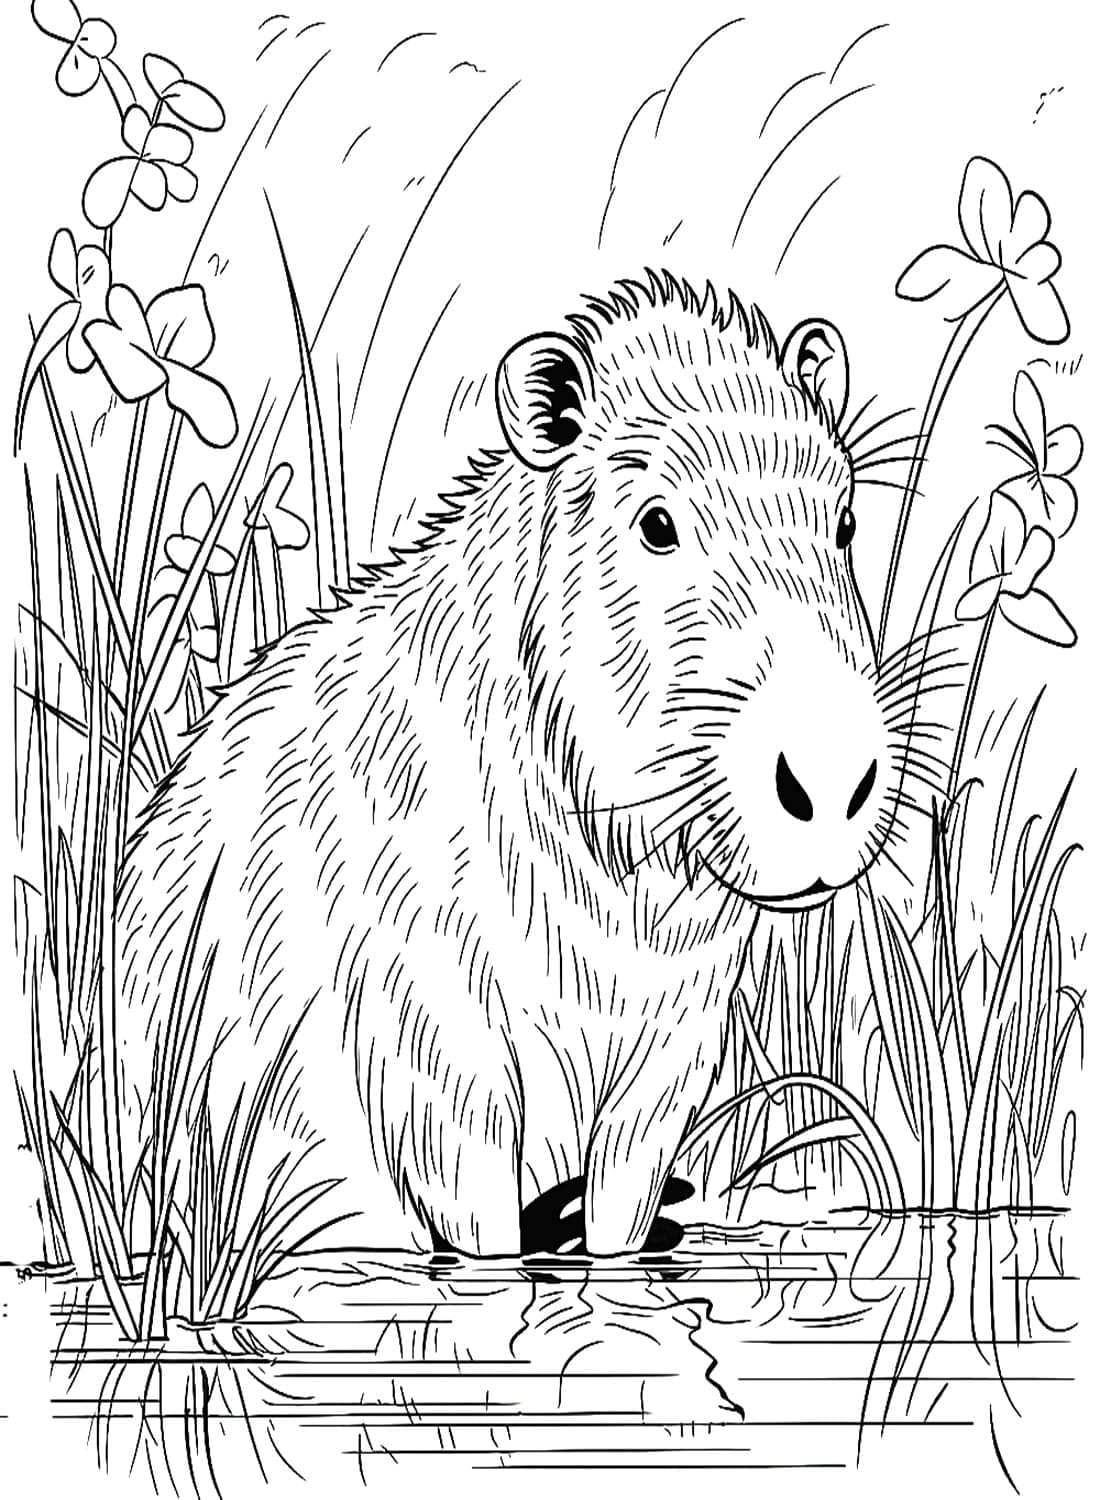 Capybara Réaliste coloring page